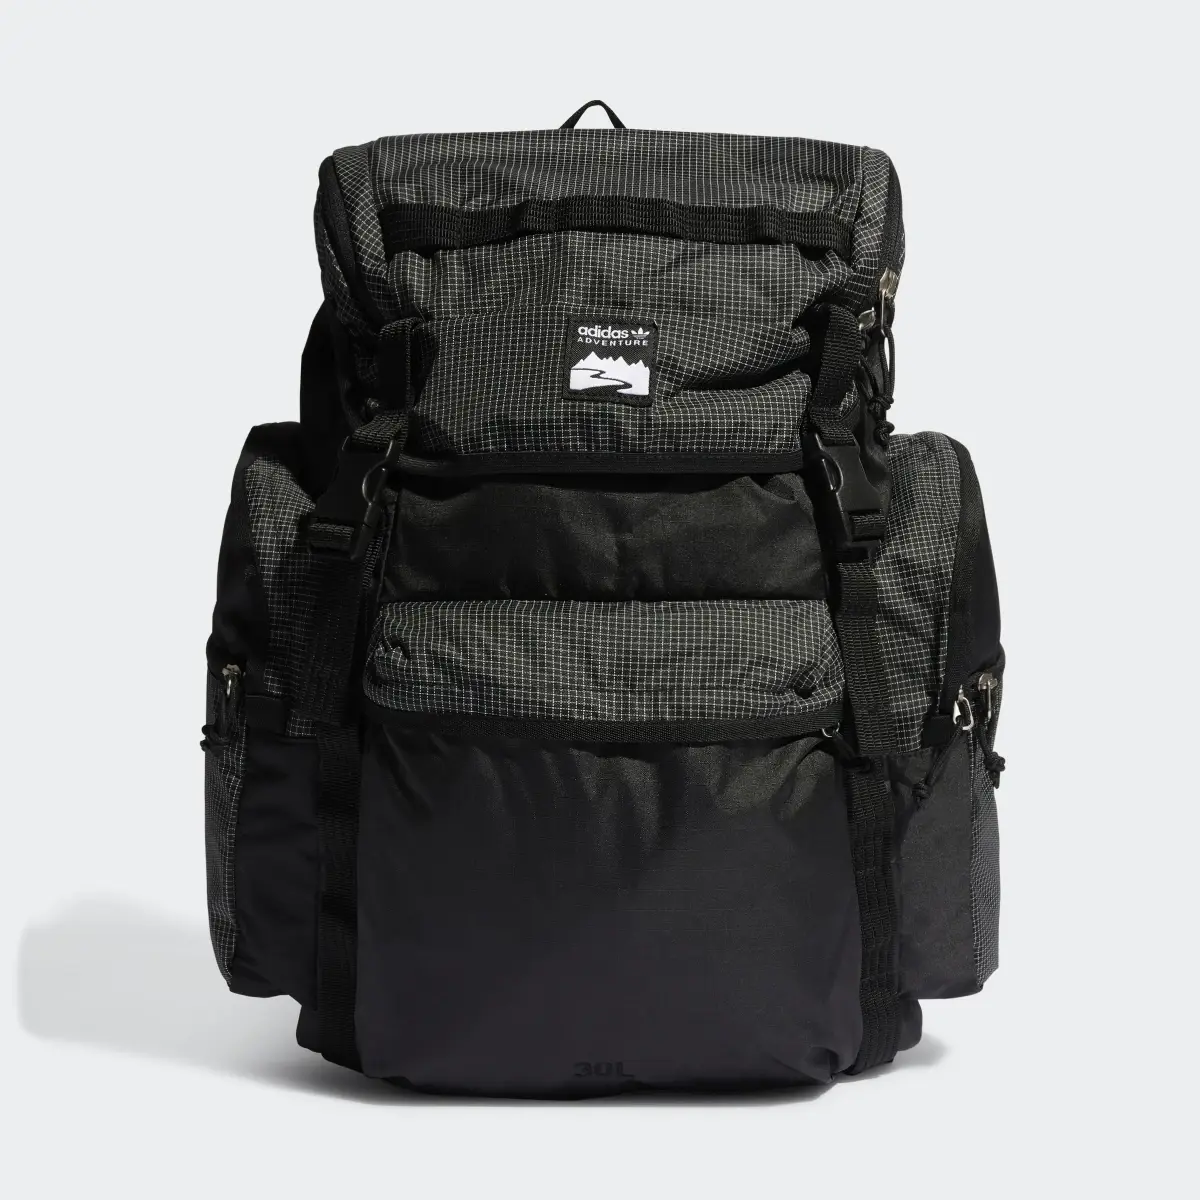 Adidas Adventure Toploader Backpack. 2